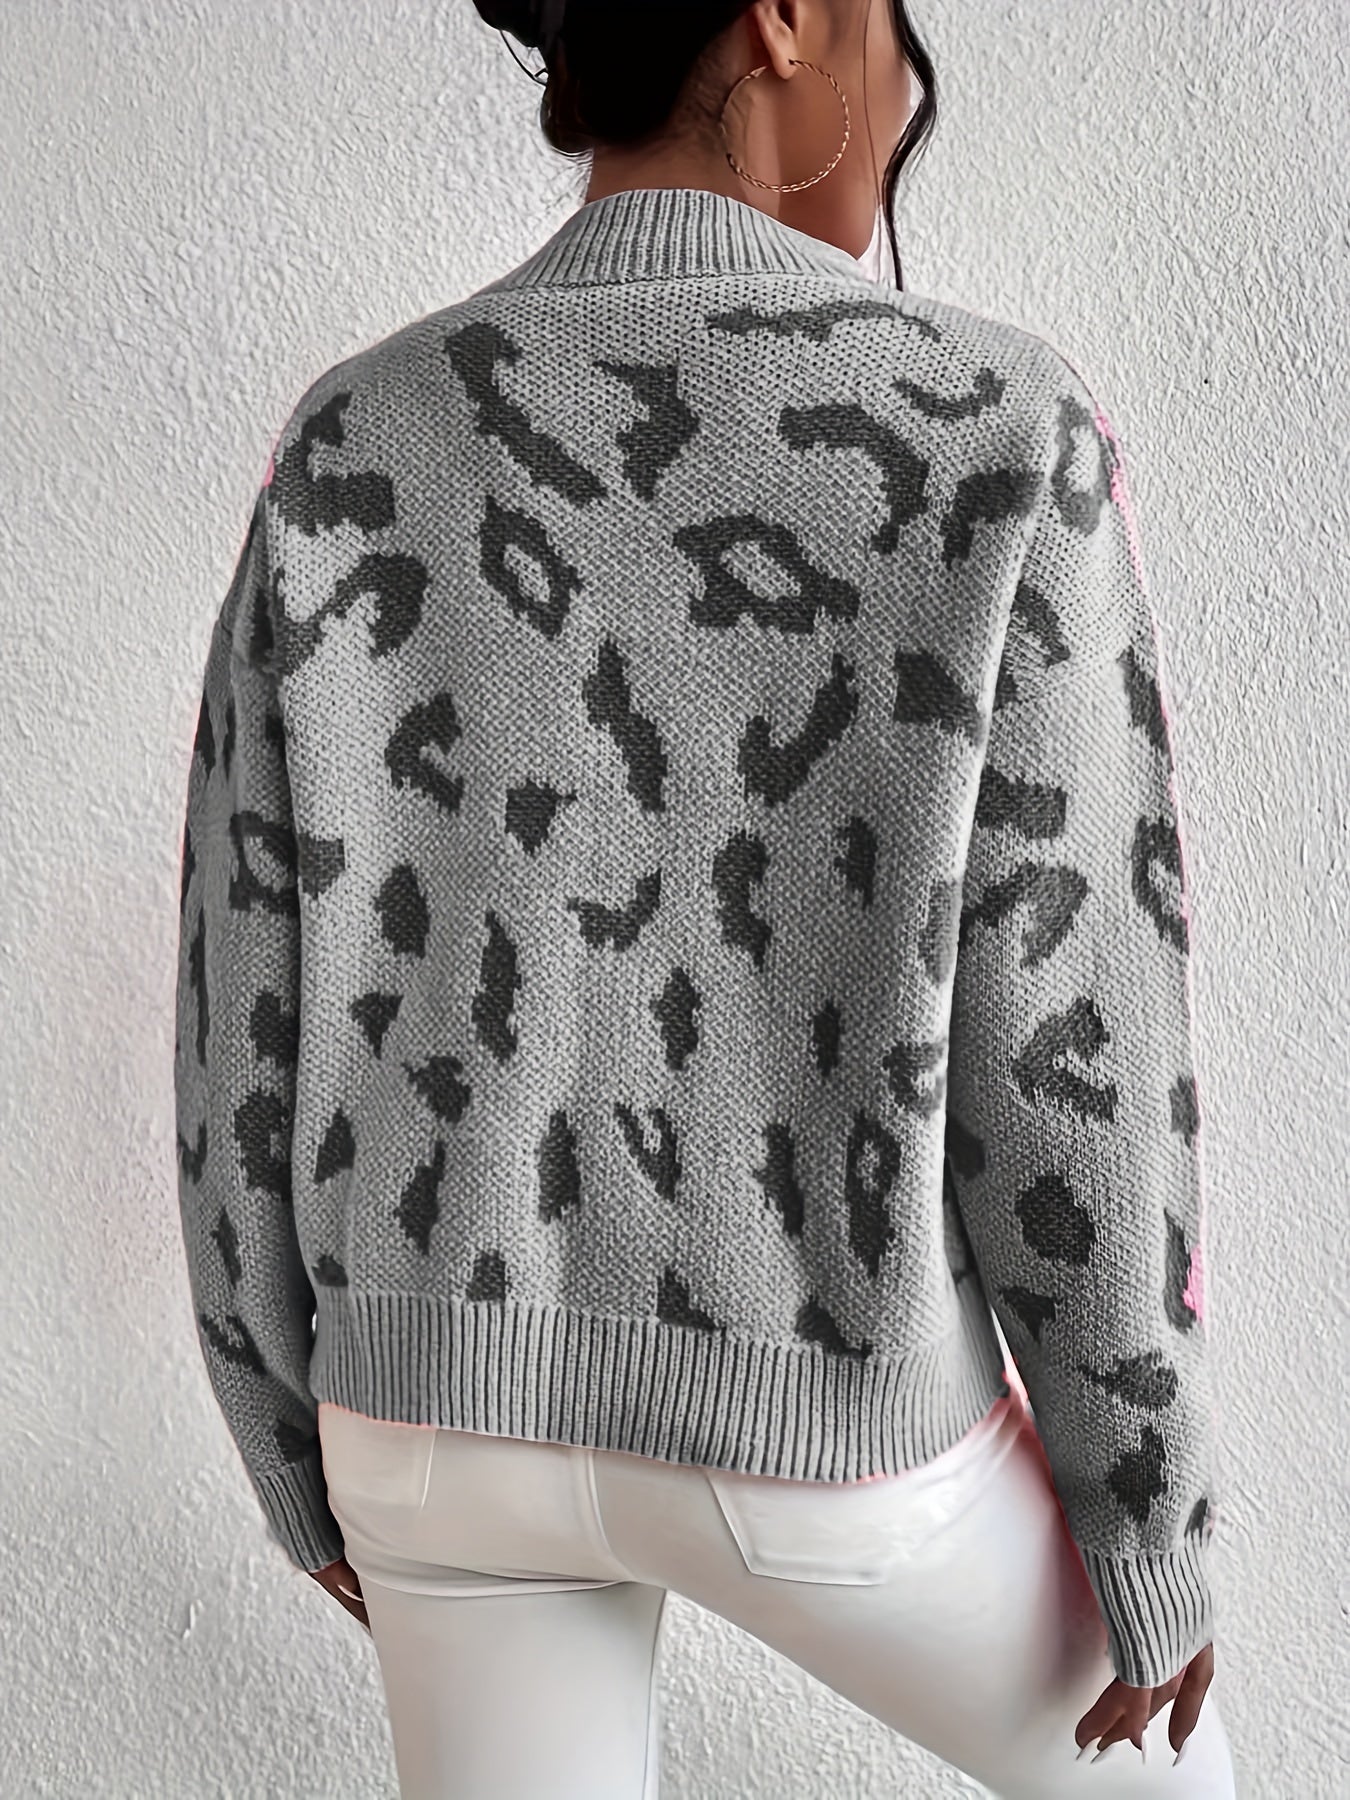 Antmvs Leopard Pattern Mock Neck Sweater, Casual Long Sleeve Sweater For Fall & Winter, Women's Clothing